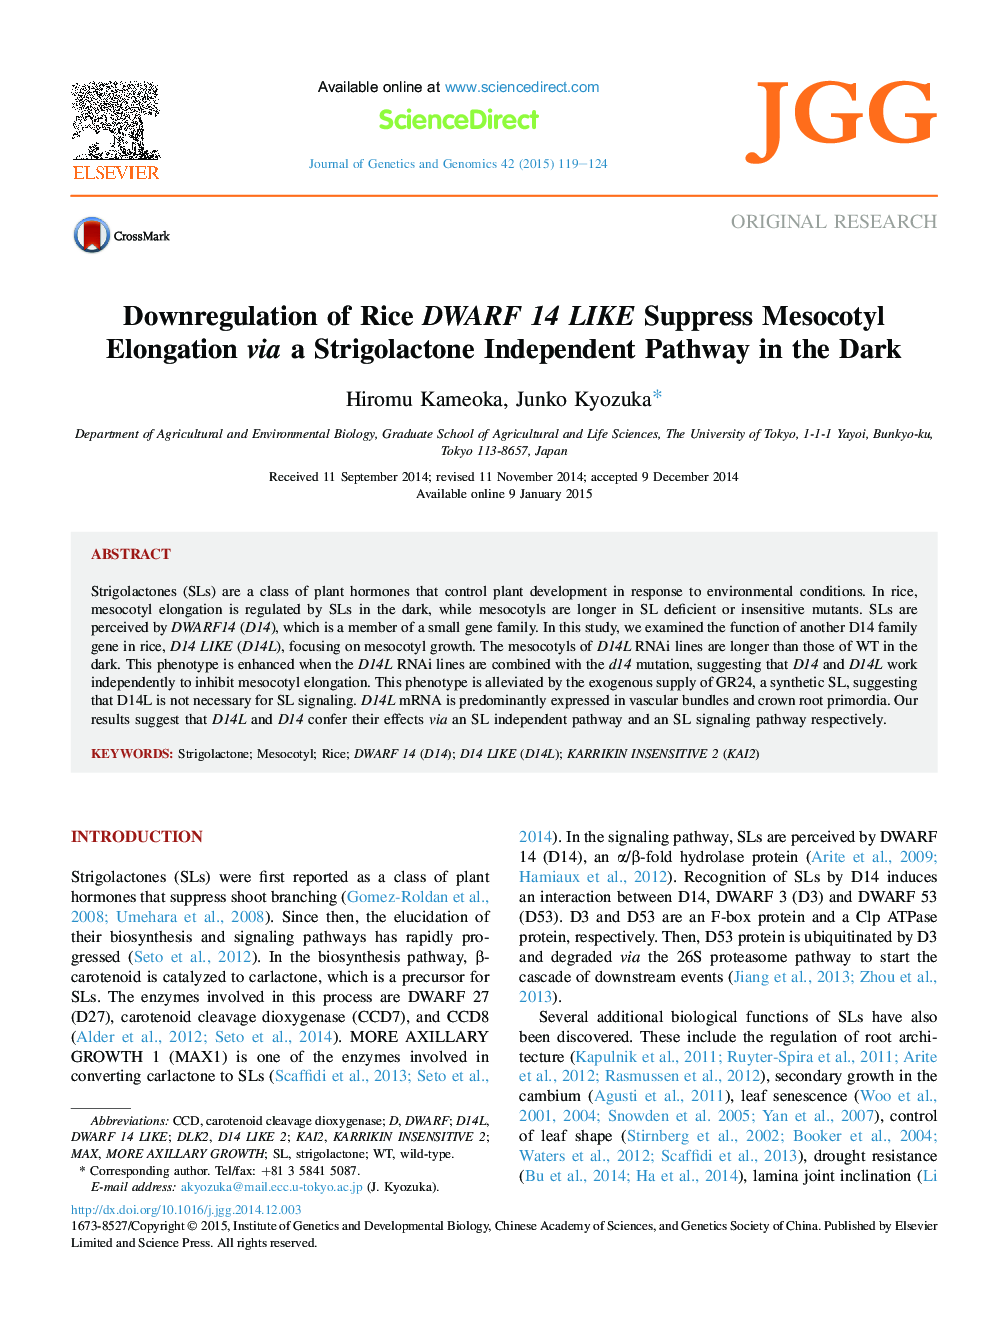 Downregulation of Rice DWARF 14 LIKE Suppress Mesocotyl Elongation via a Strigolactone Independent Pathway in the Dark